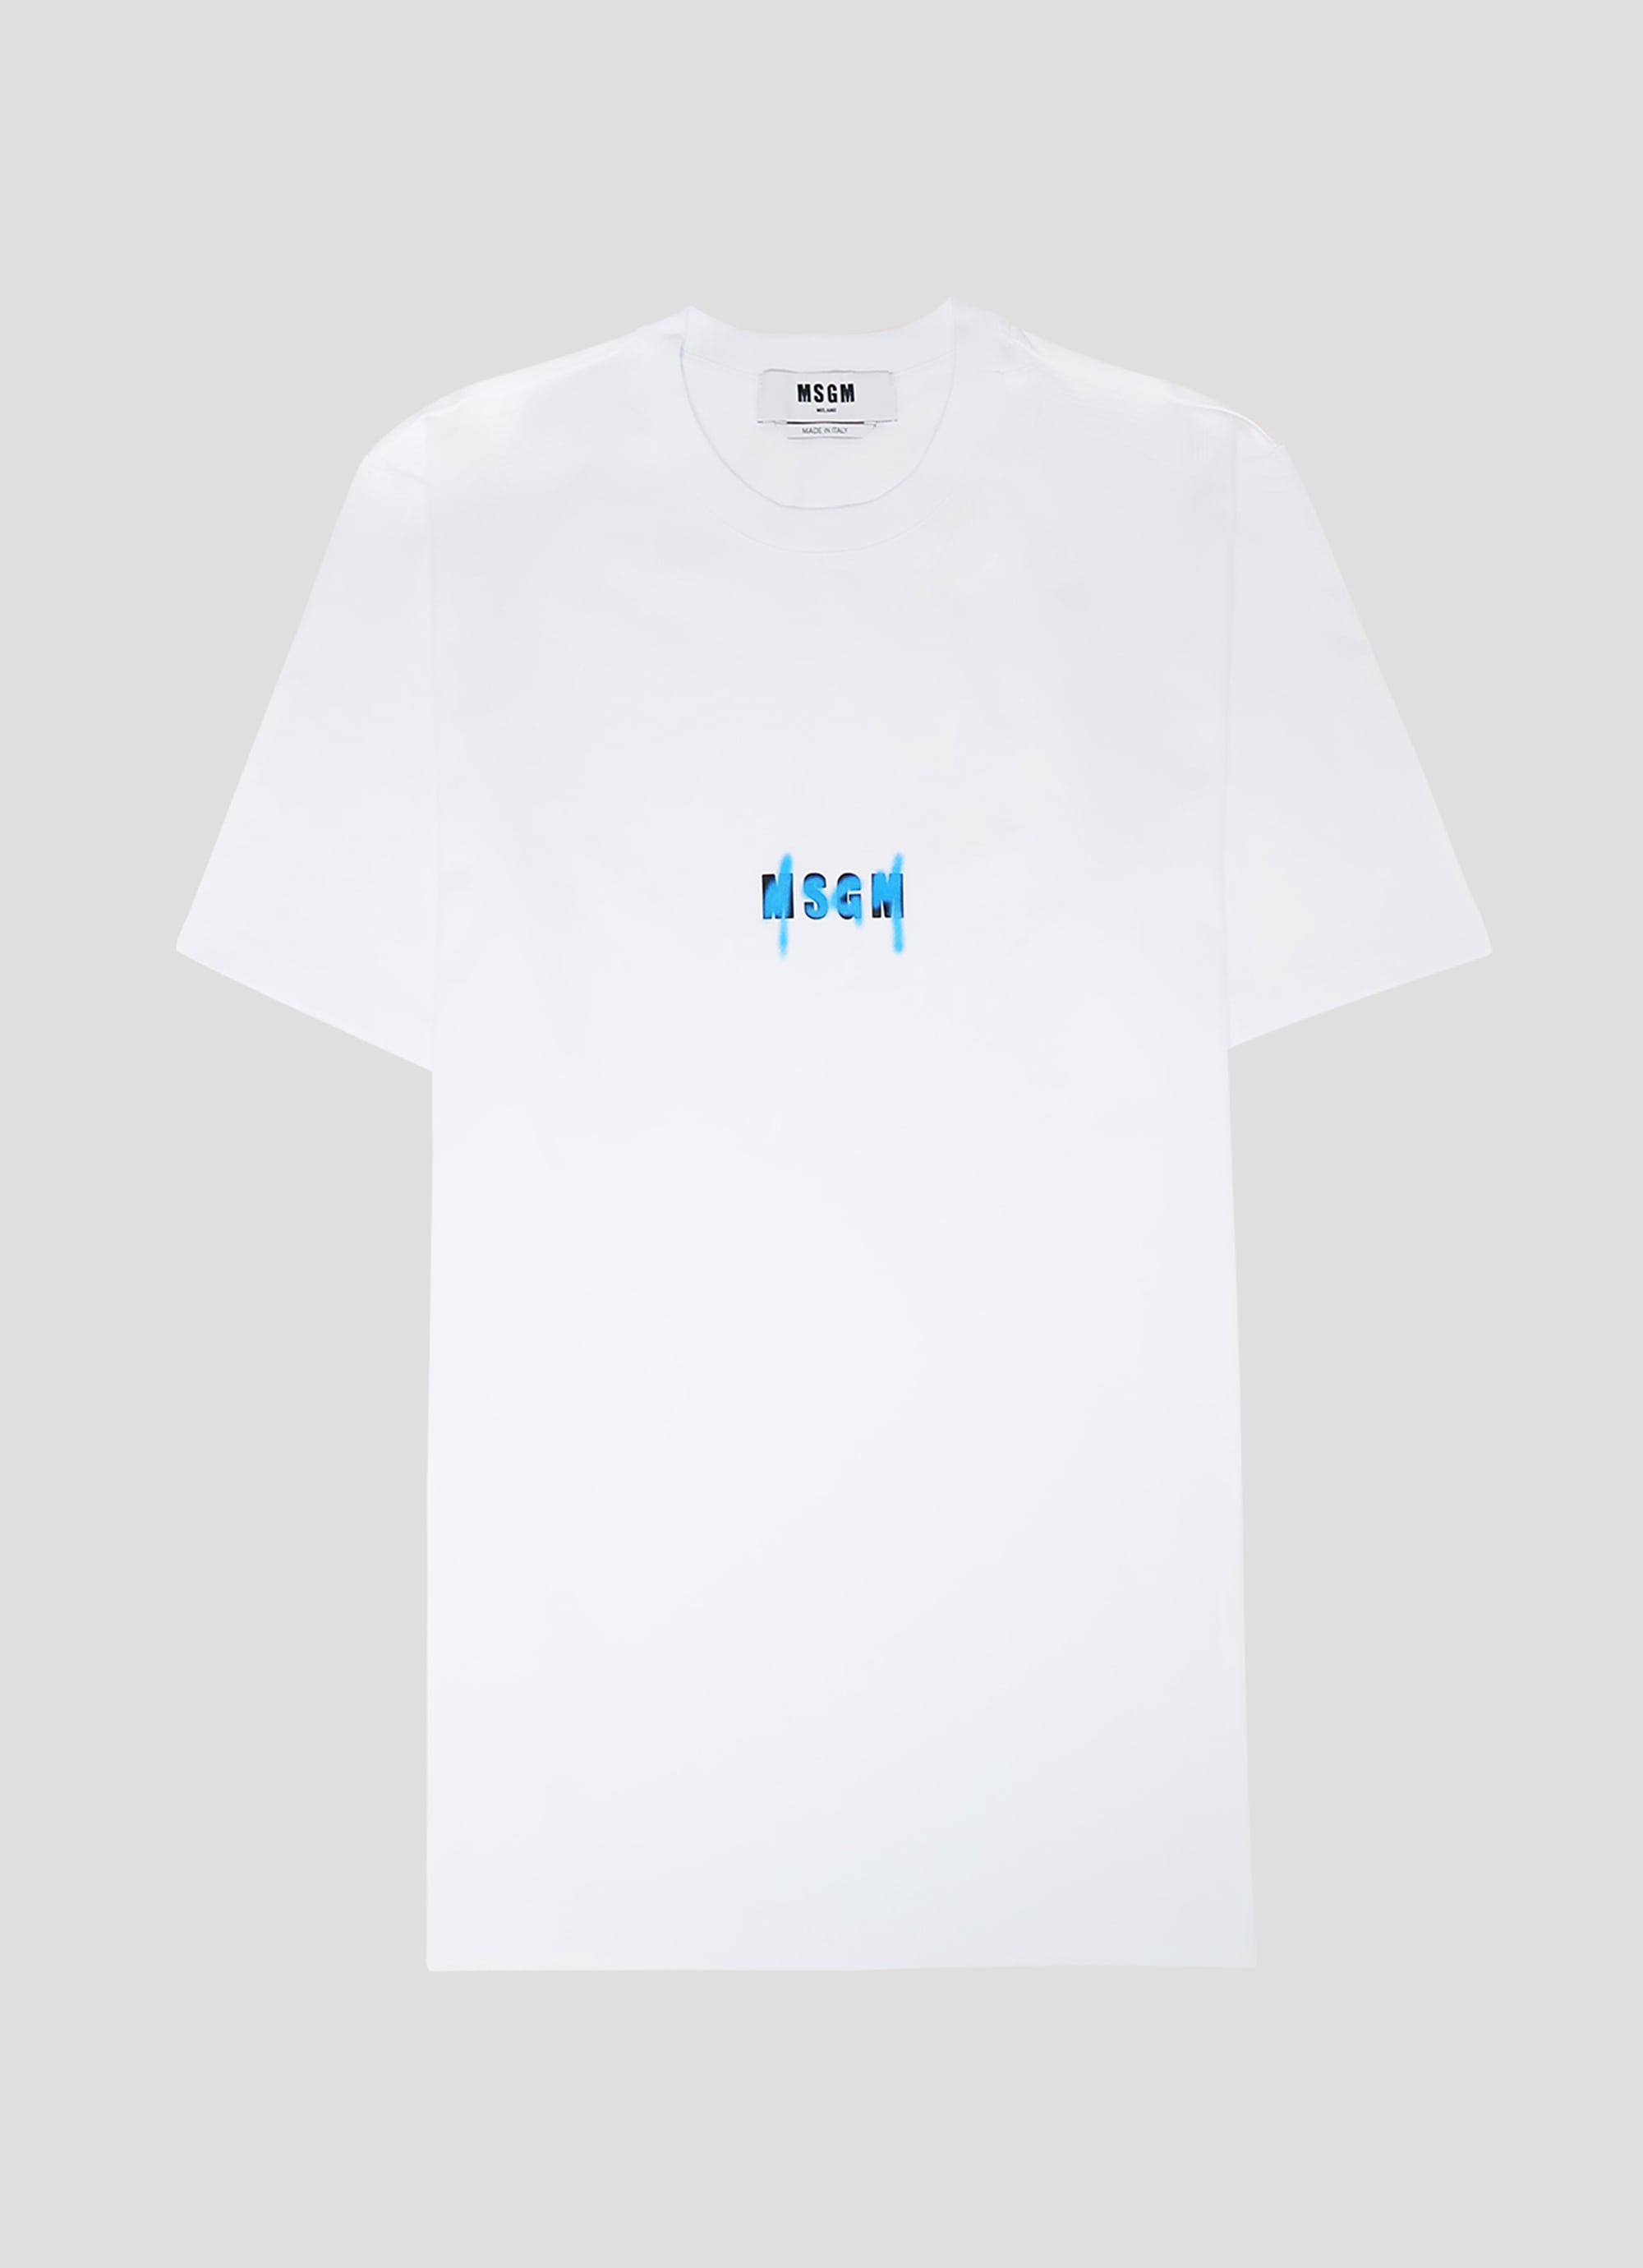 MSGMスプレーロゴ Tシャツ【EXCLUSIVE】